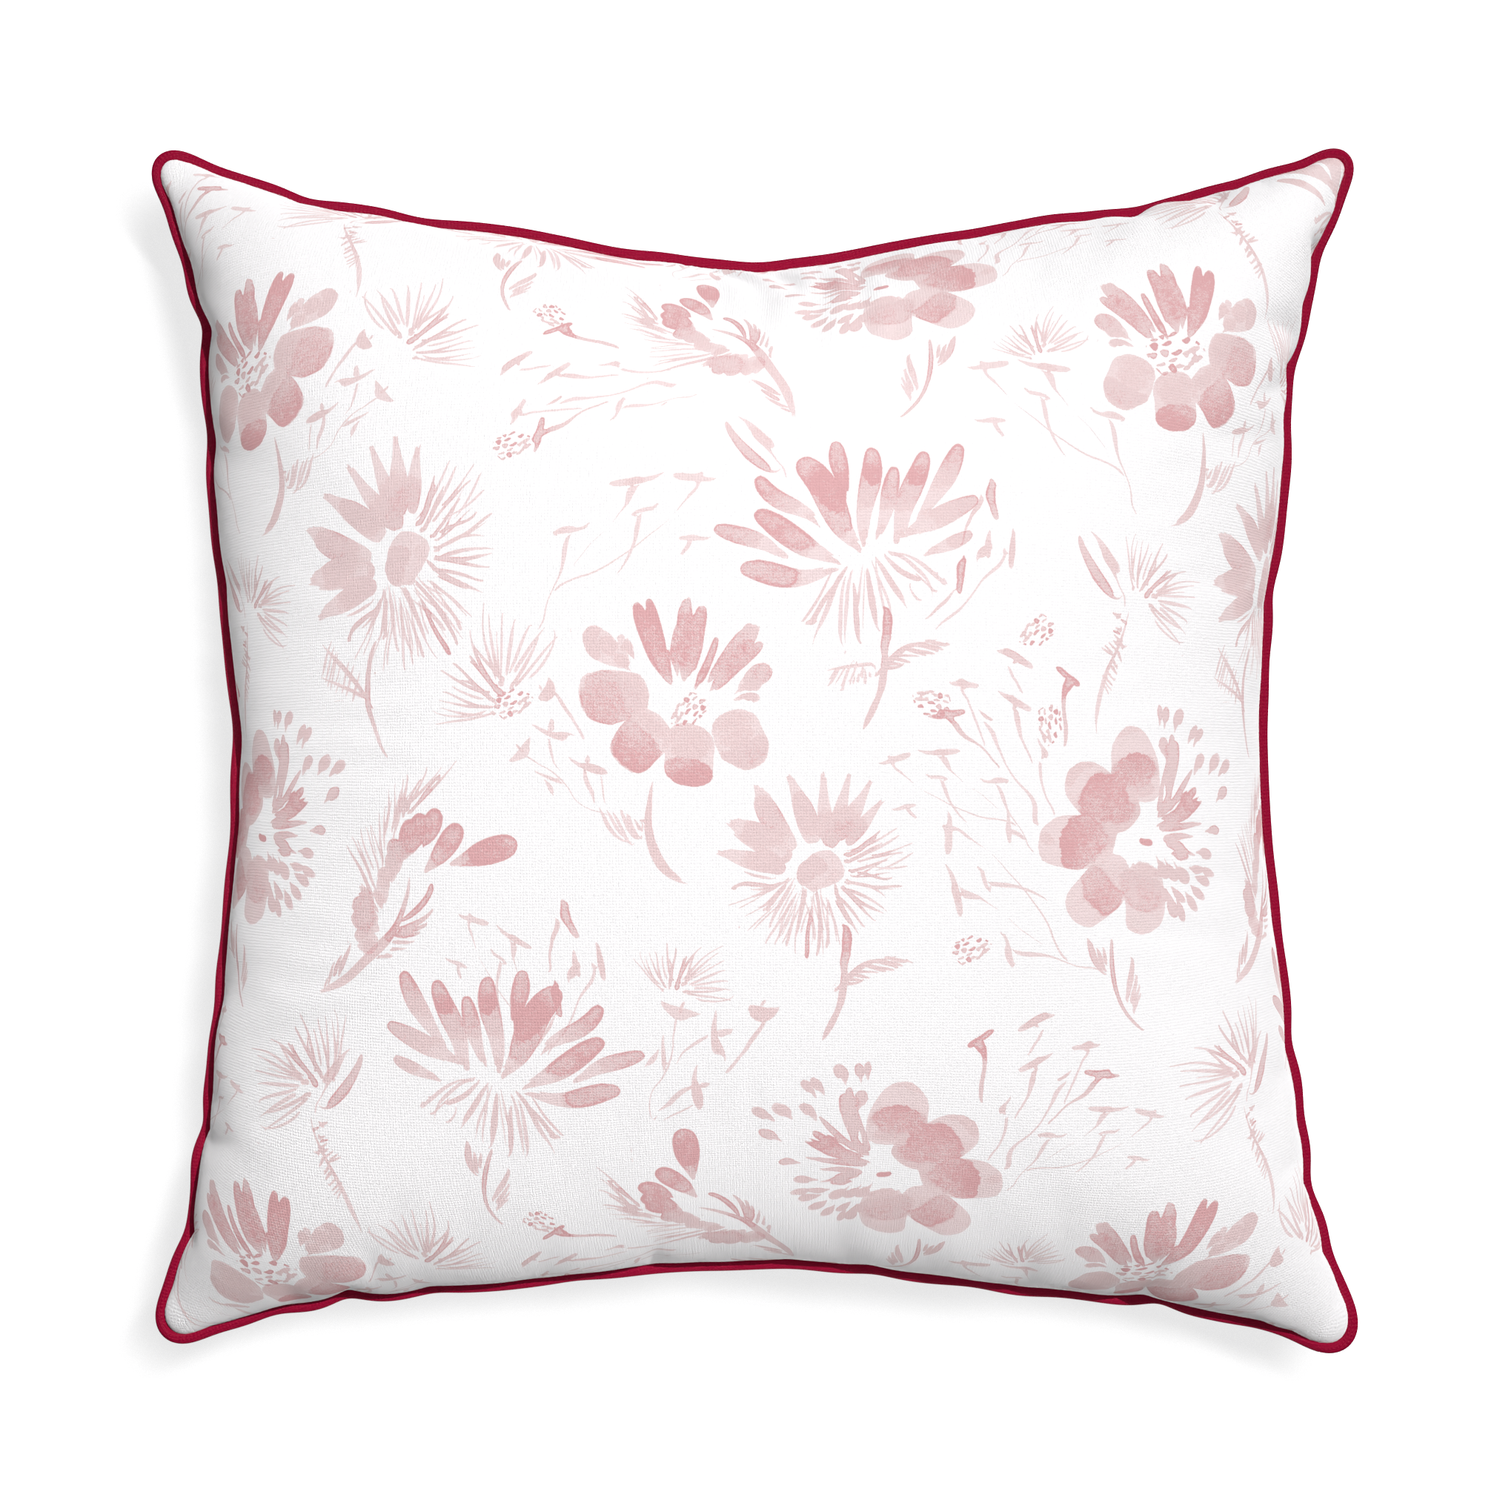 Euro-sham blake custom pillow with raspberry piping on white background